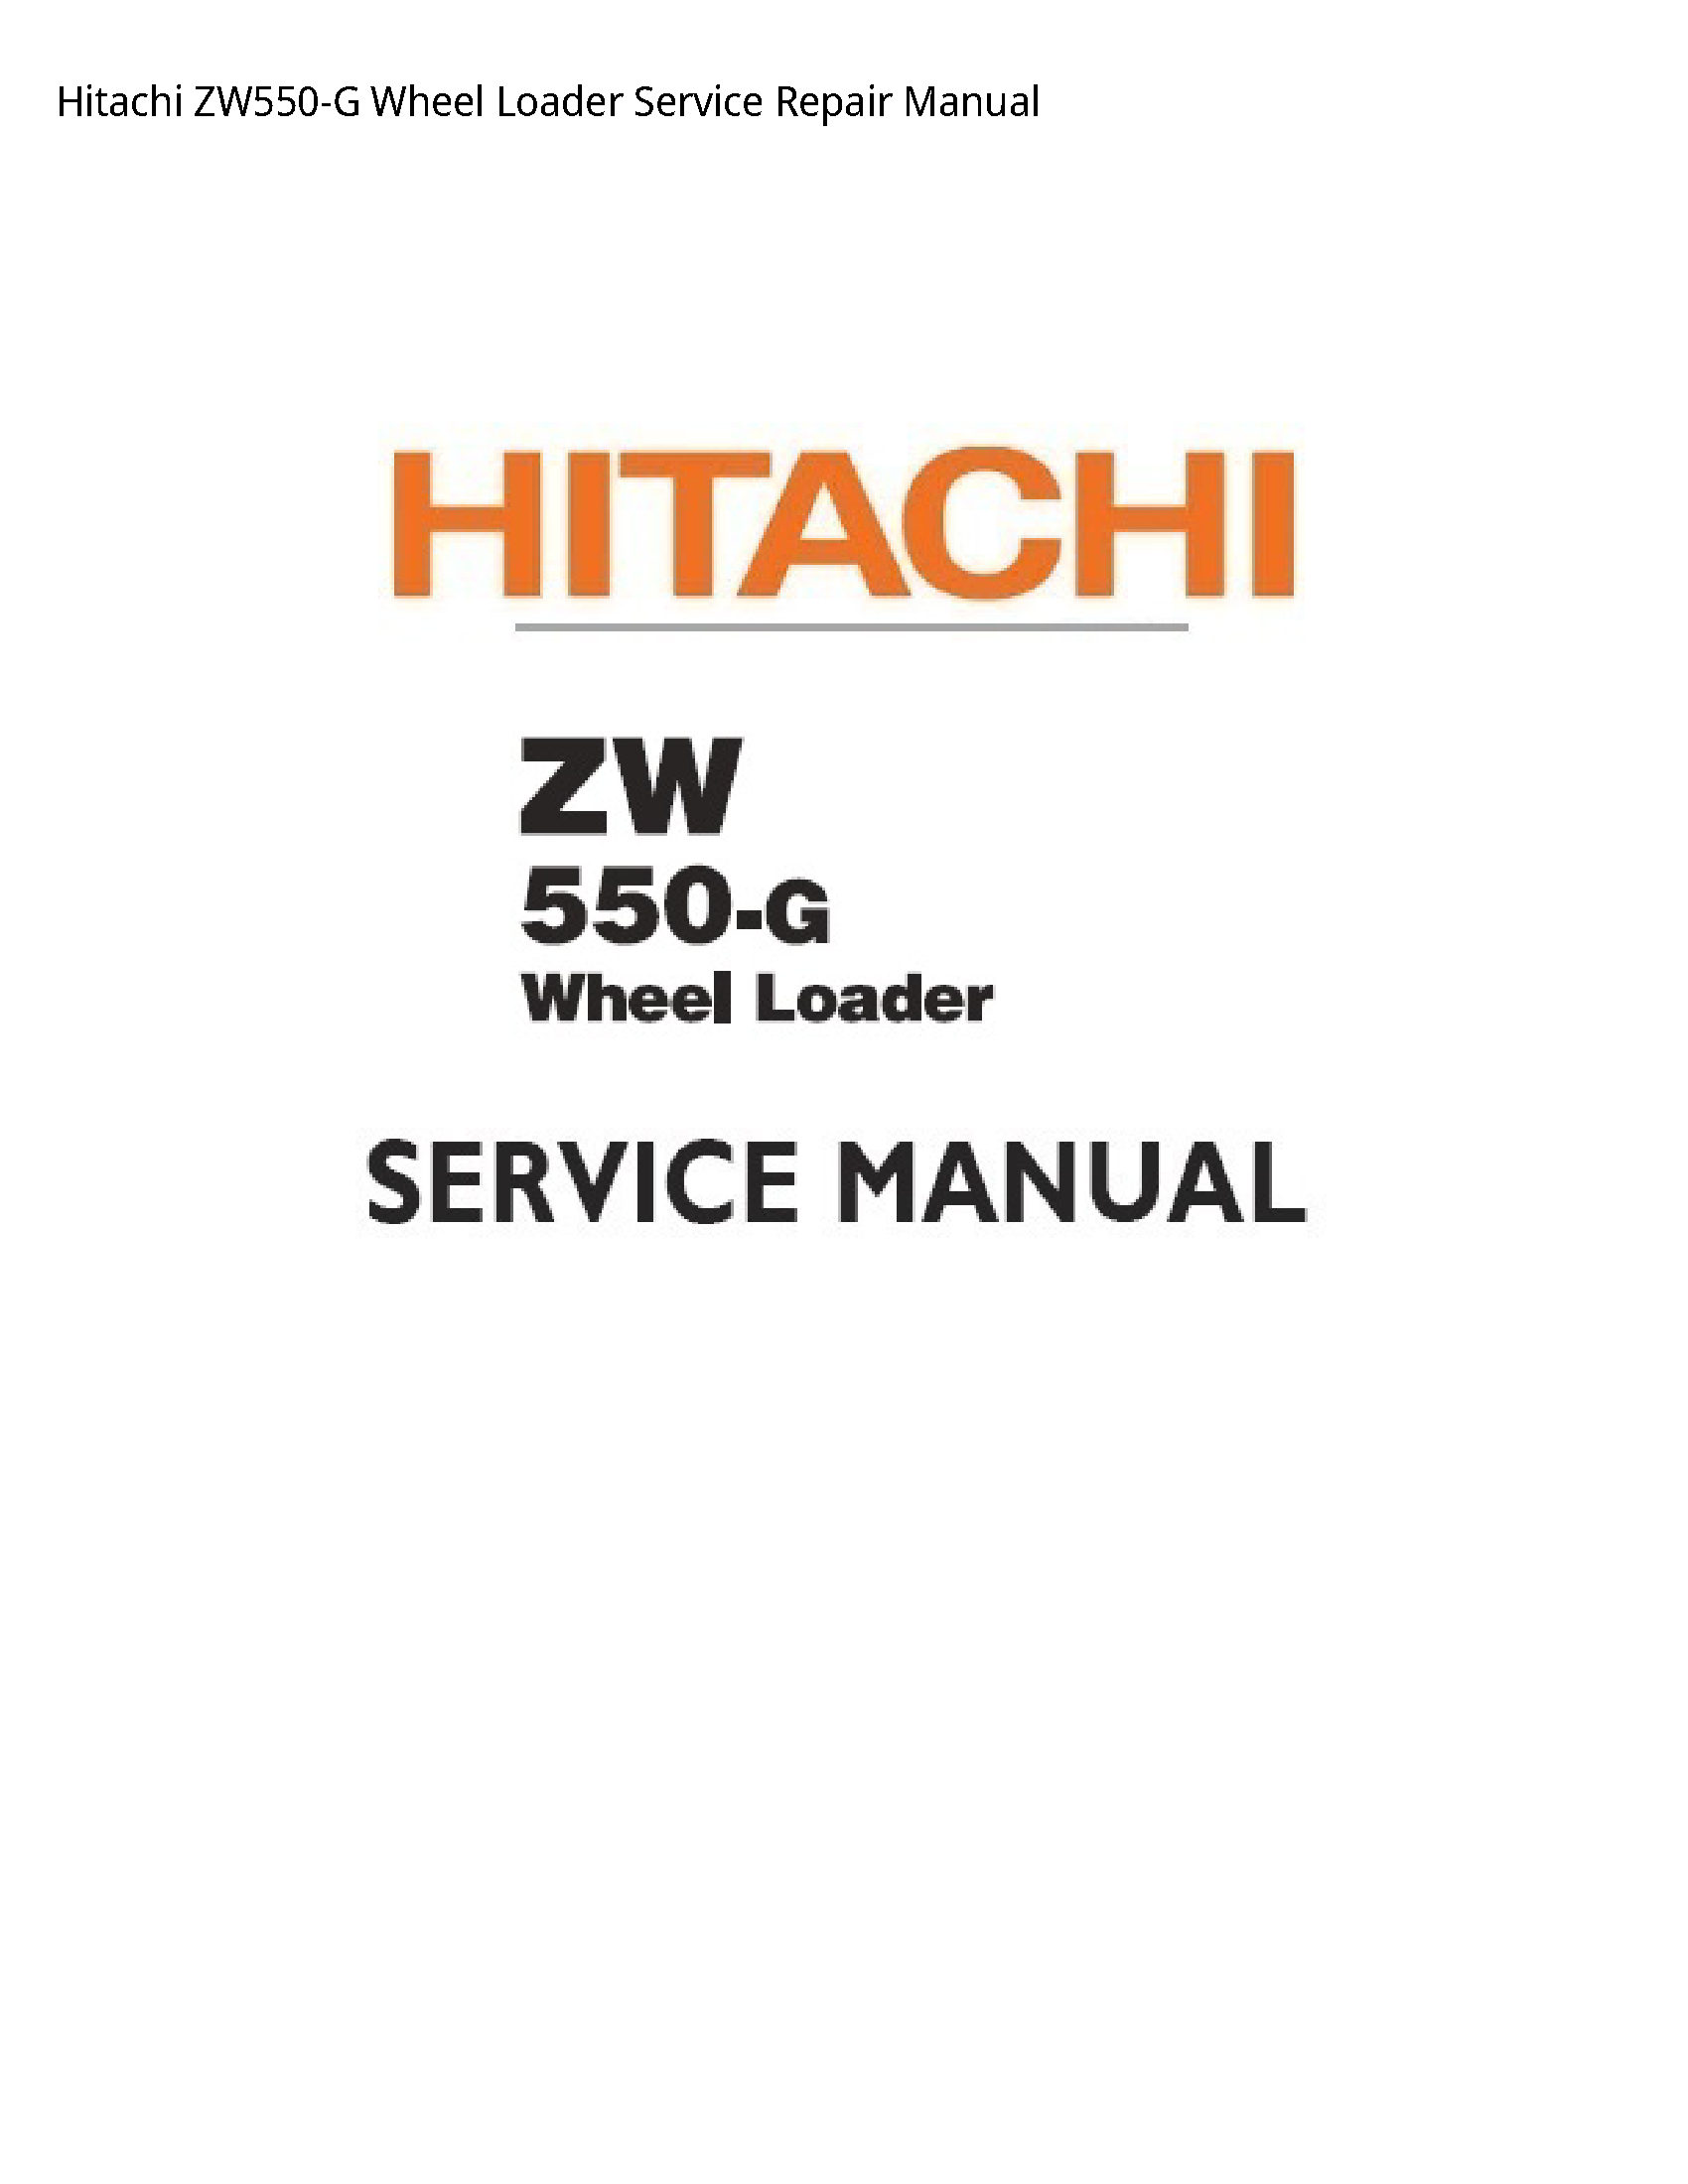 Hitachi ZW550-G Wheel Loader manual